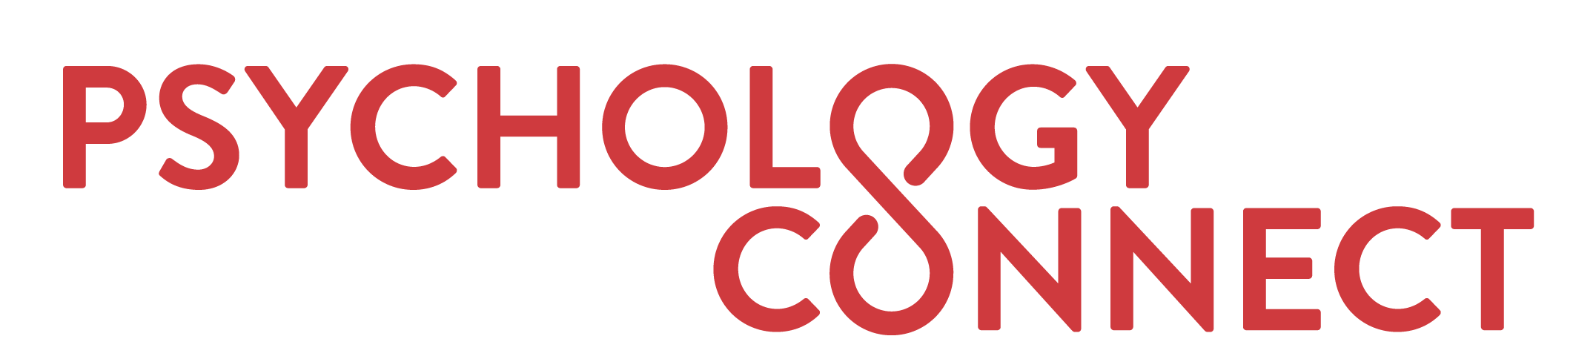 Psychology Connect logo